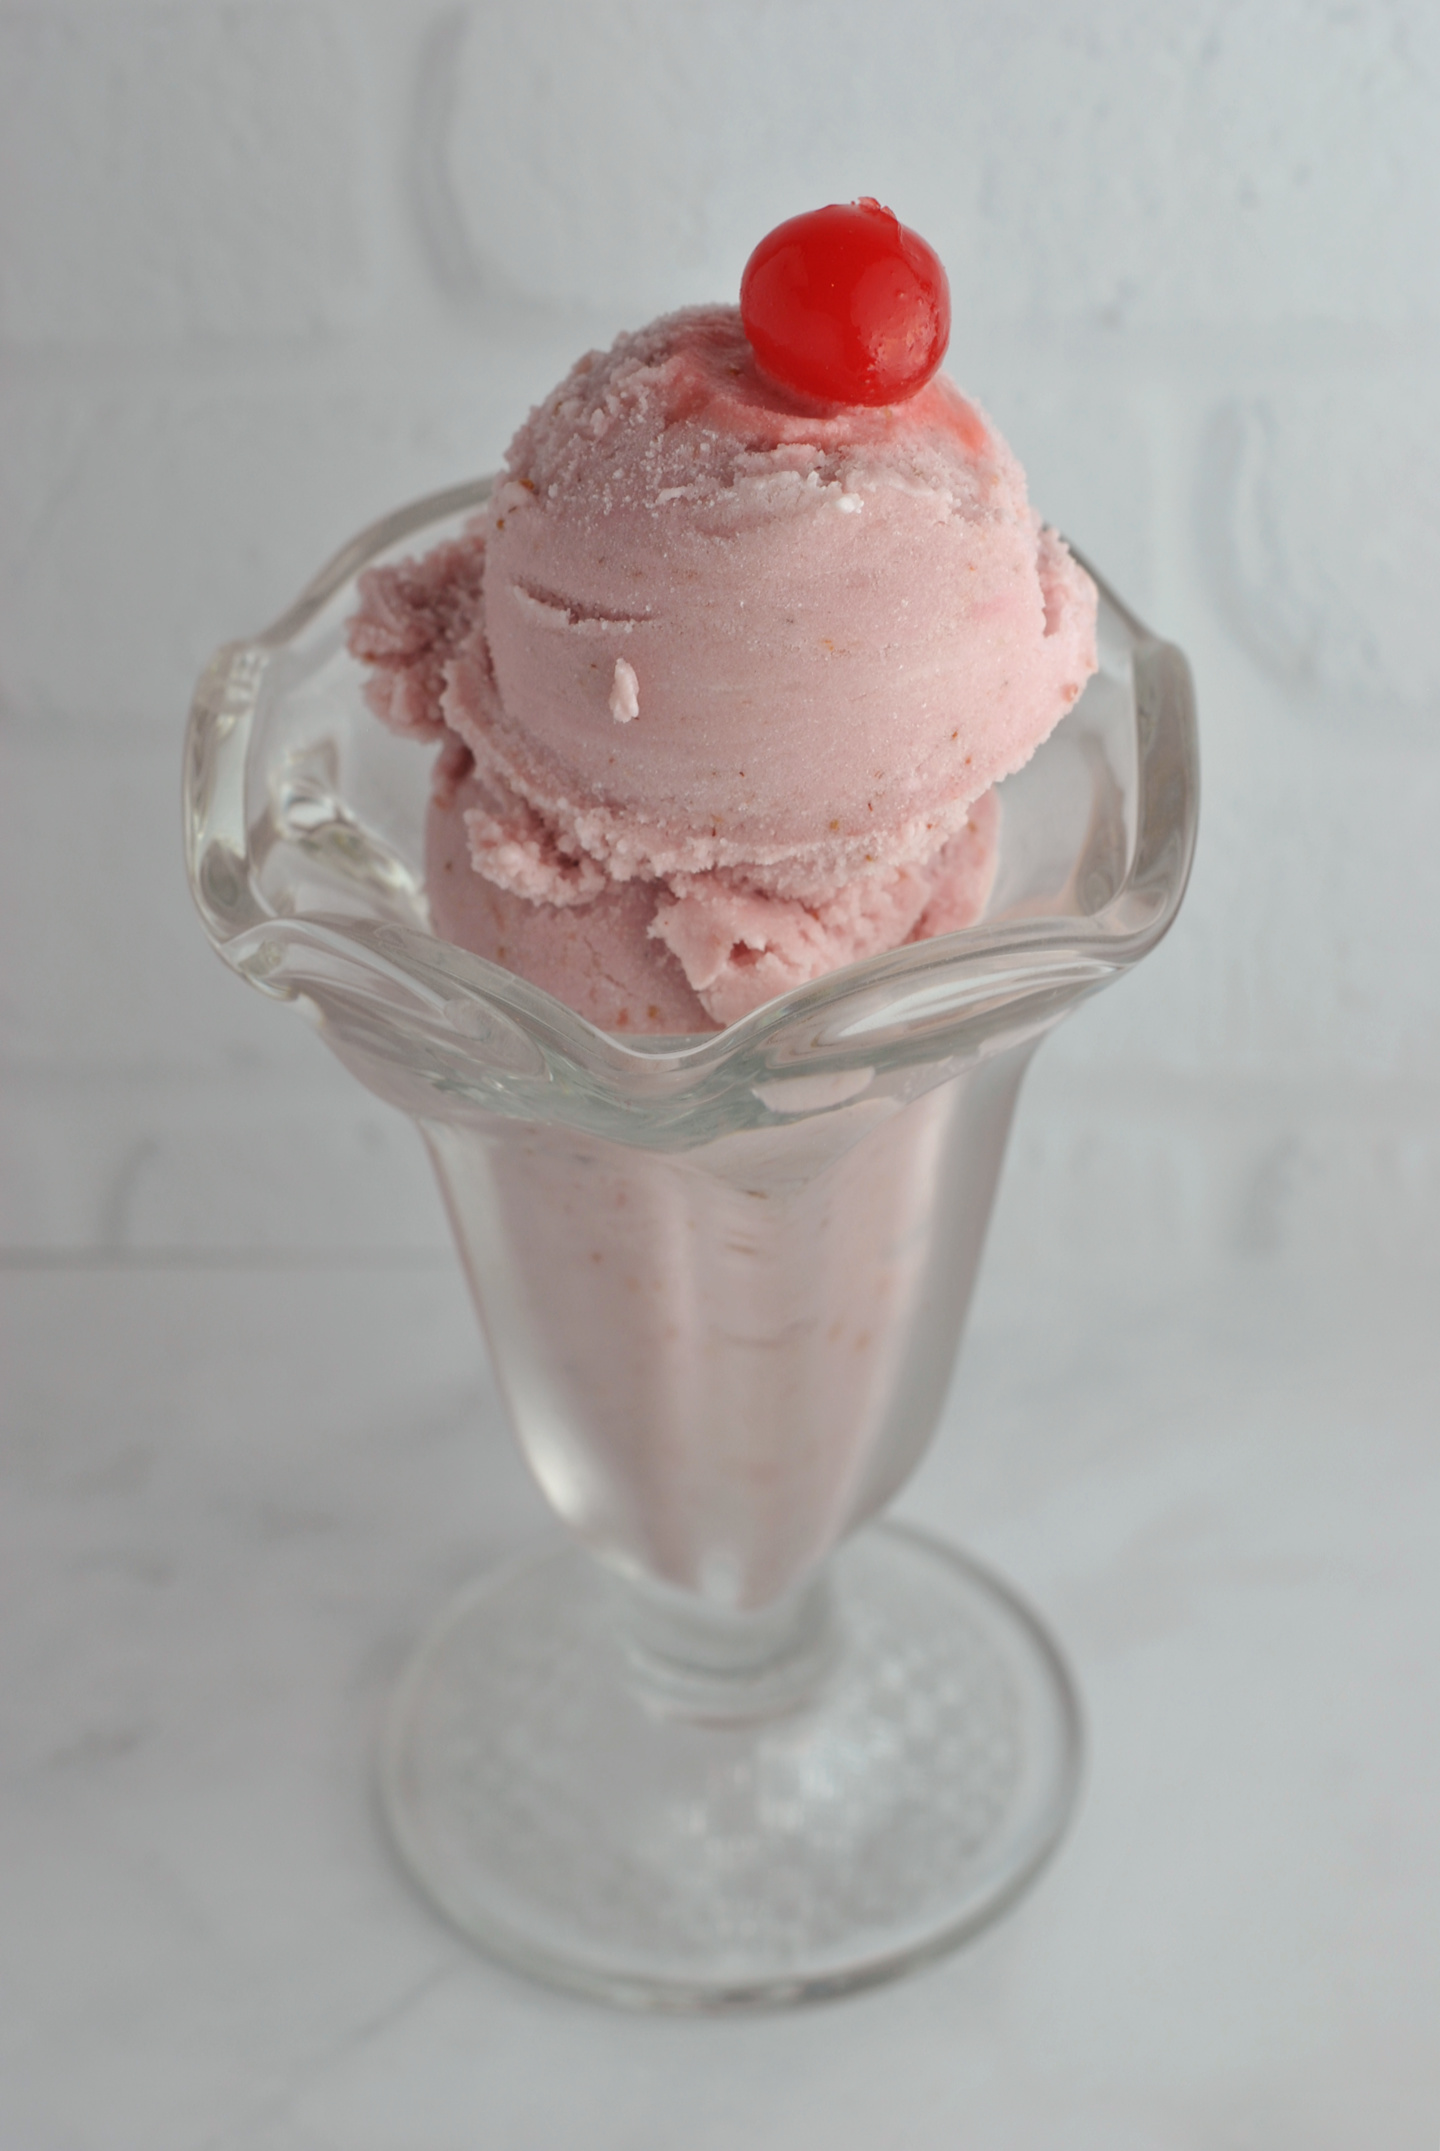 Vegan Strawberry Ice Cream via @preventionrd